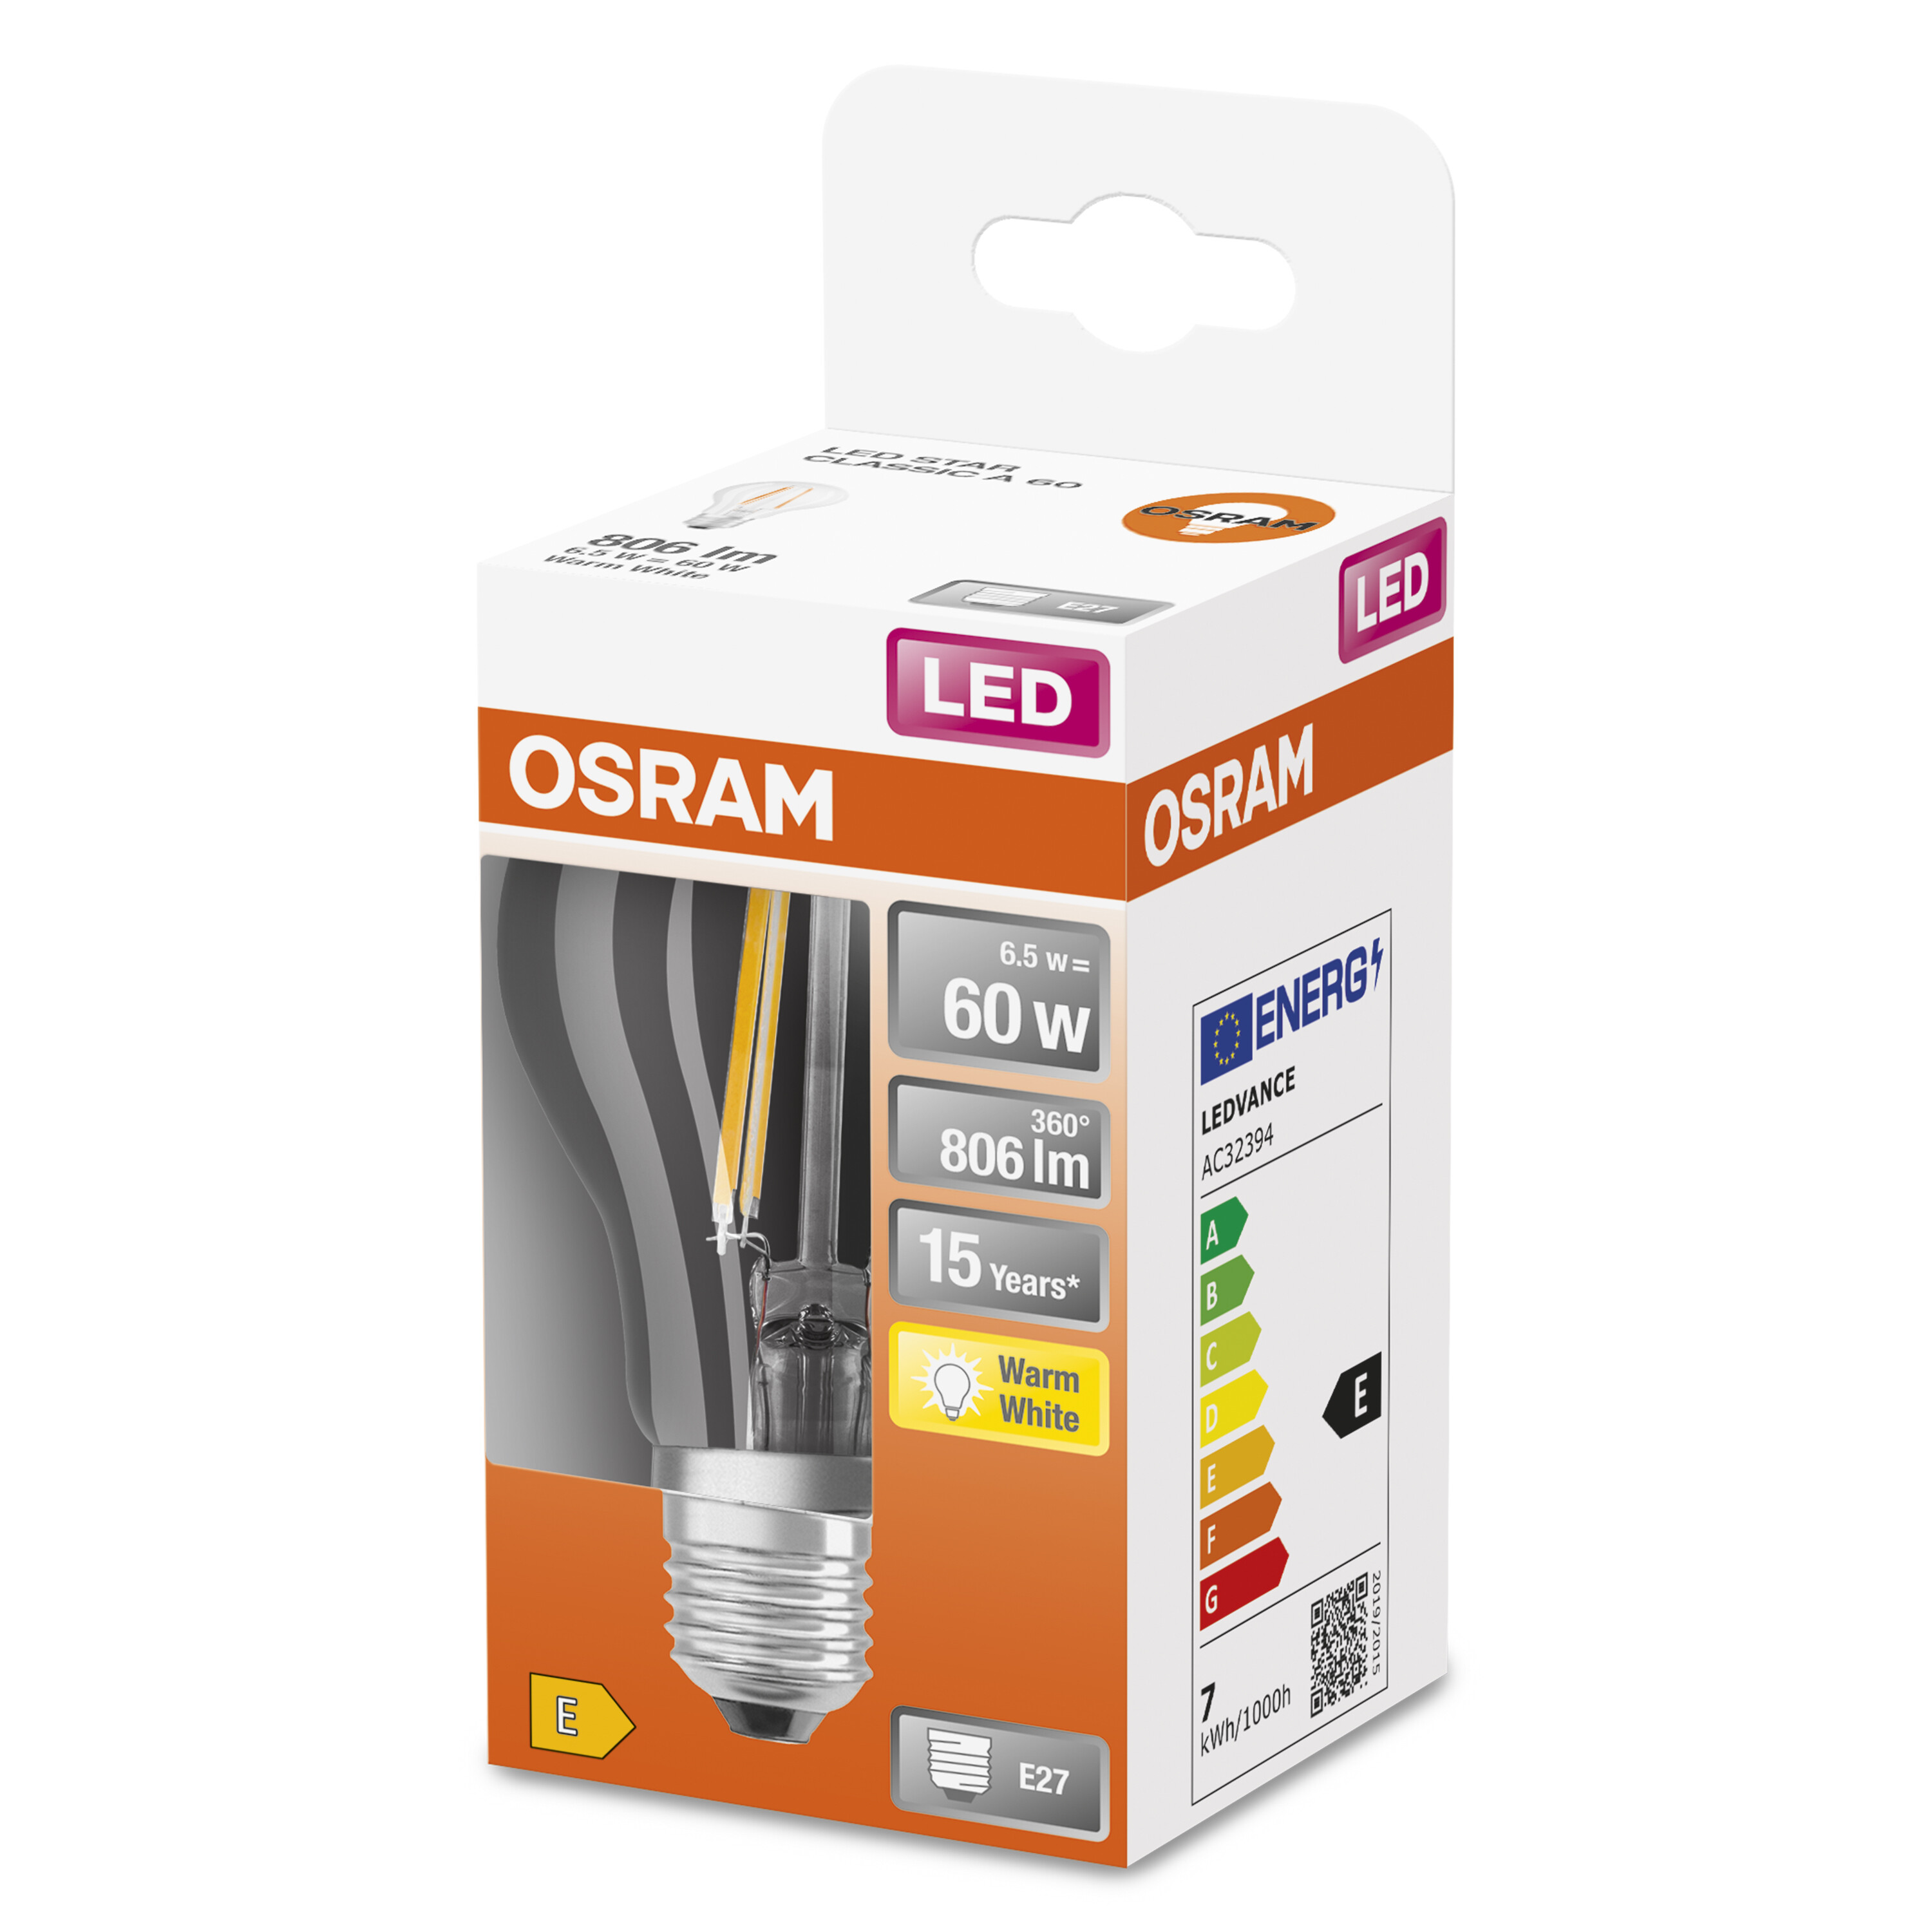 LED Retrofit CLASSIC A Warmweiß Lumen LED OSRAM  Lampe 806